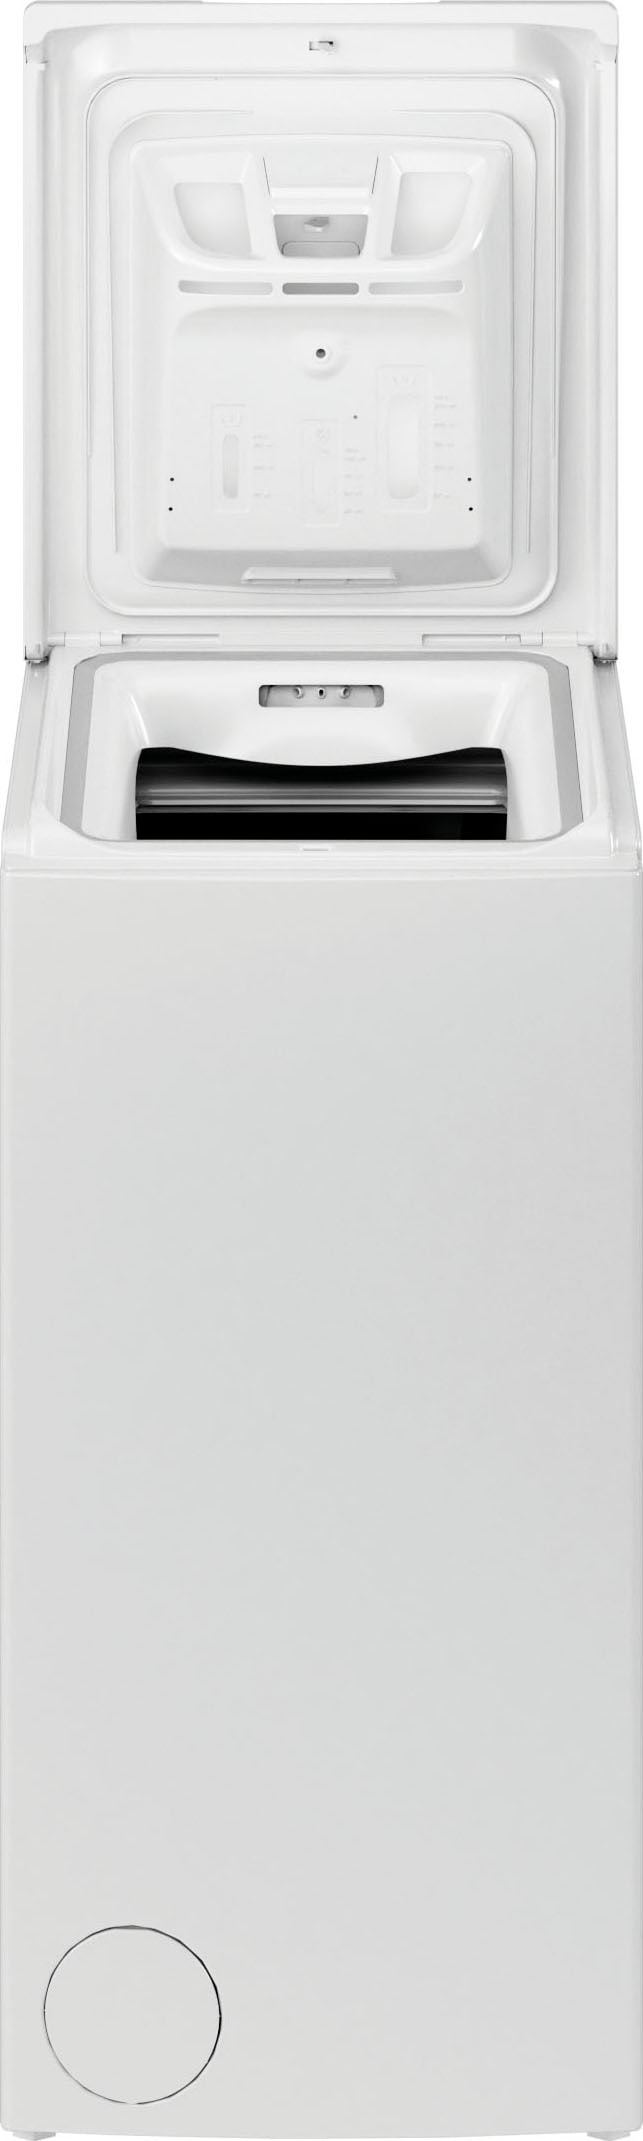 Privileg Waschmaschine Toplader DE, 5,5 DE«, U/ kg, LD55 1100 PWT kaufen LD55 »PWT min